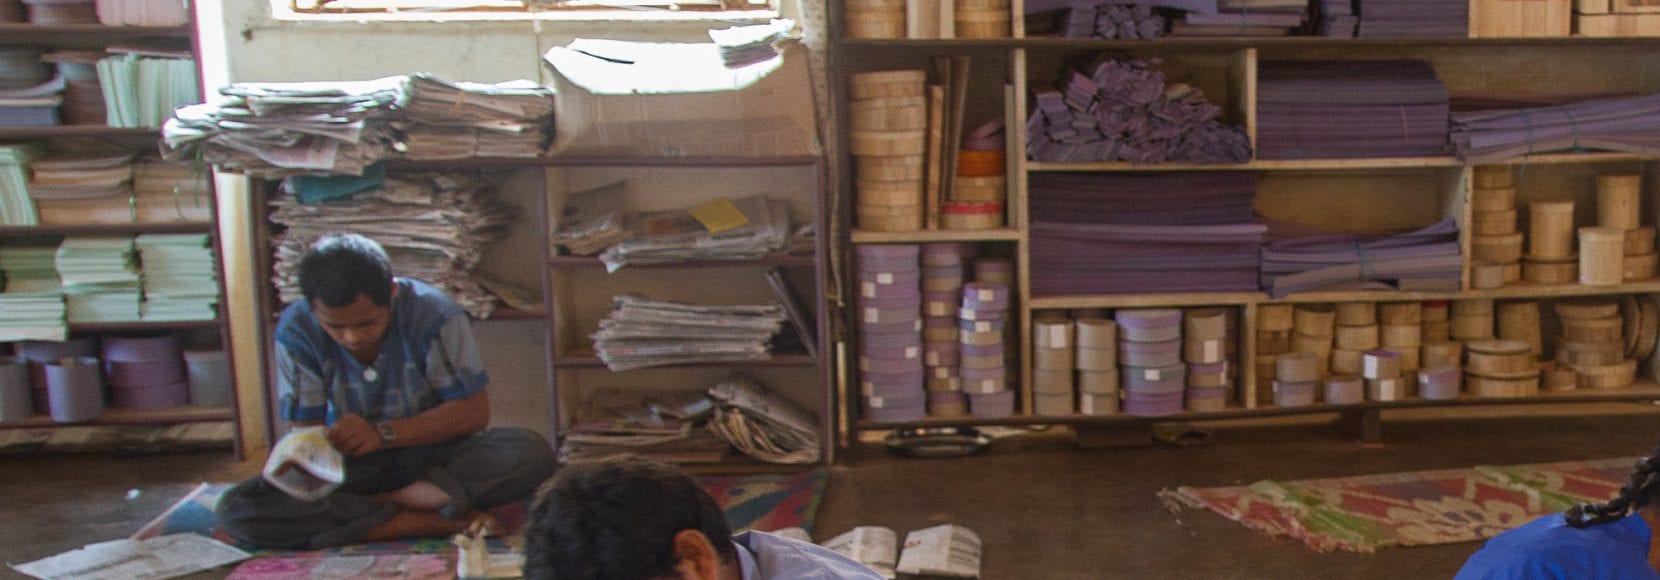 Making paper products at Chetana, Sirsi, North Kanara district, Karnataka state, India. Photo by Nile Sprague, 2013